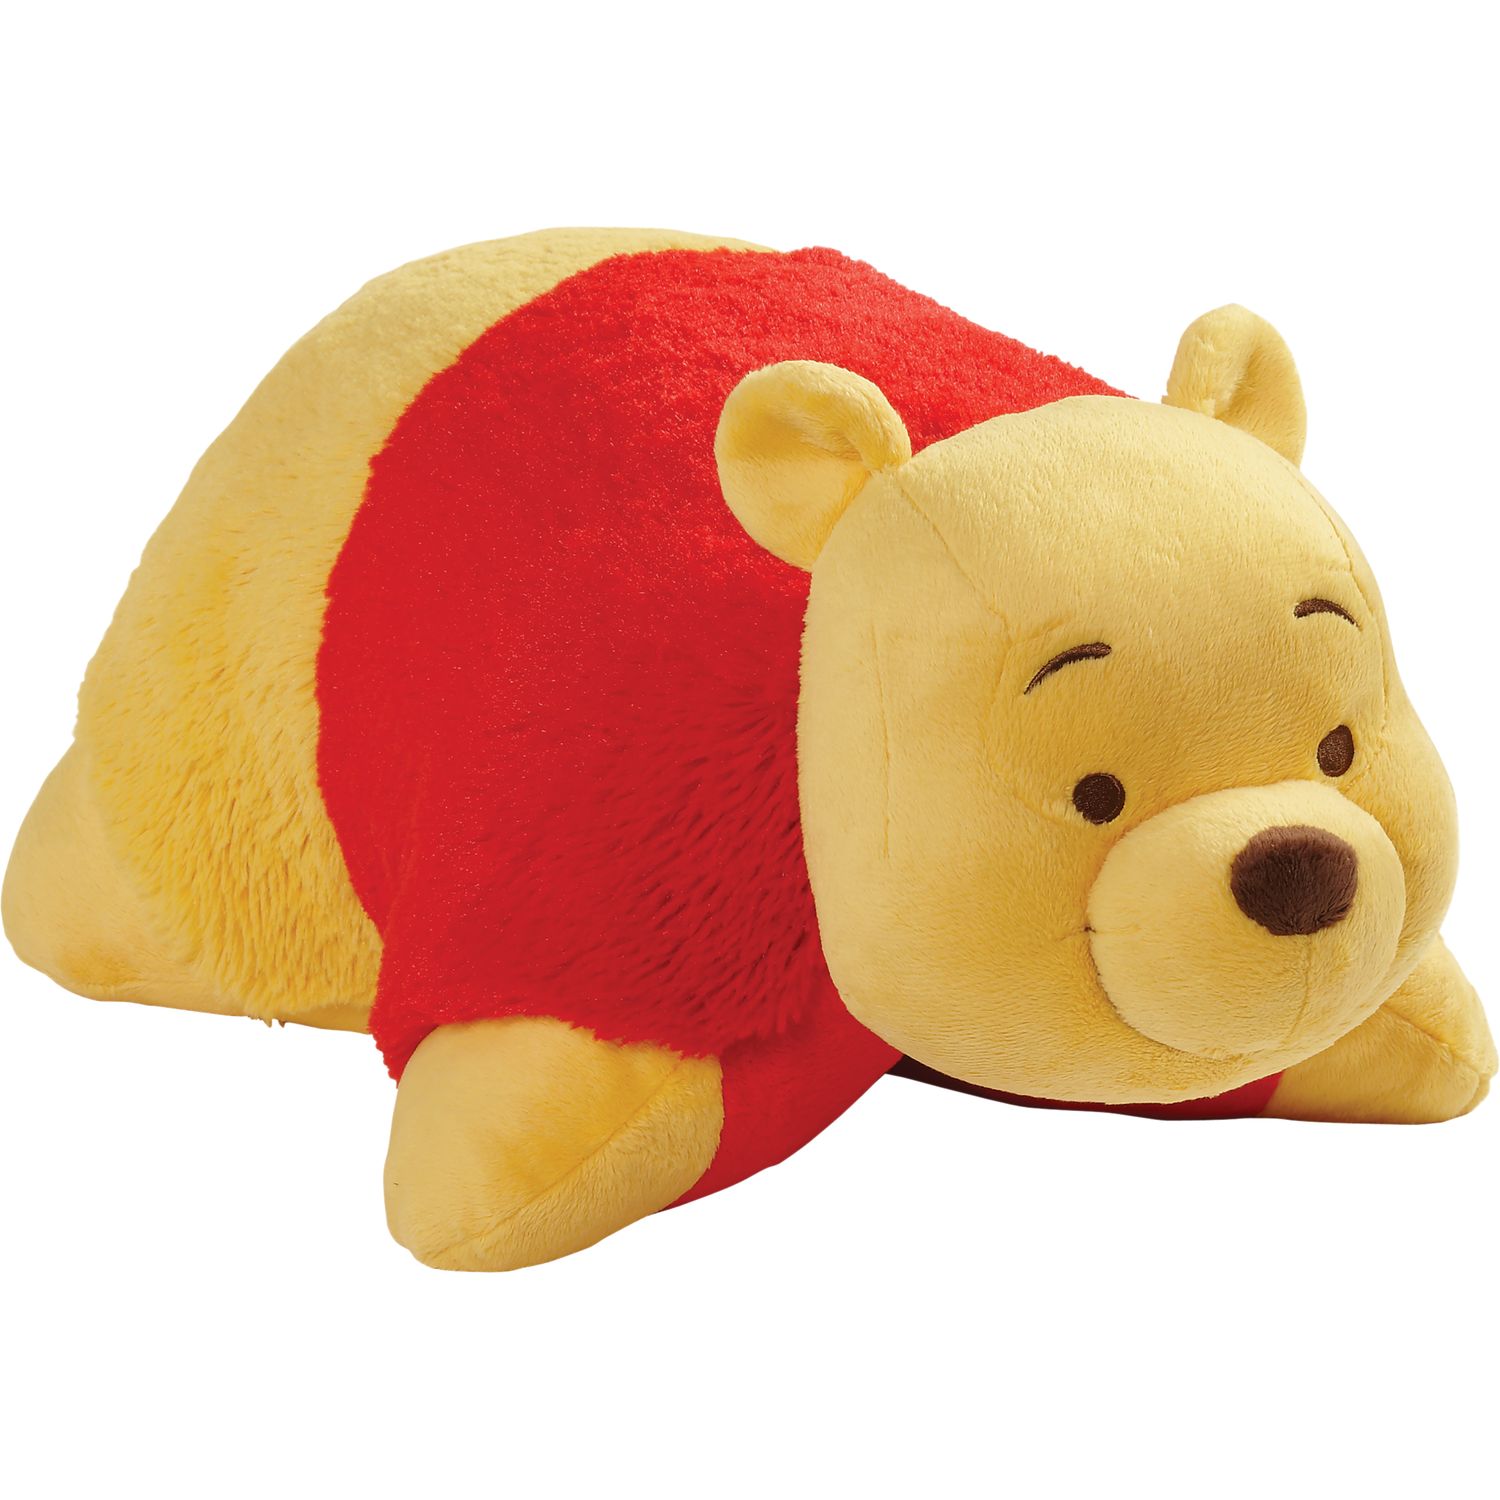 pooh bear stuffed animal